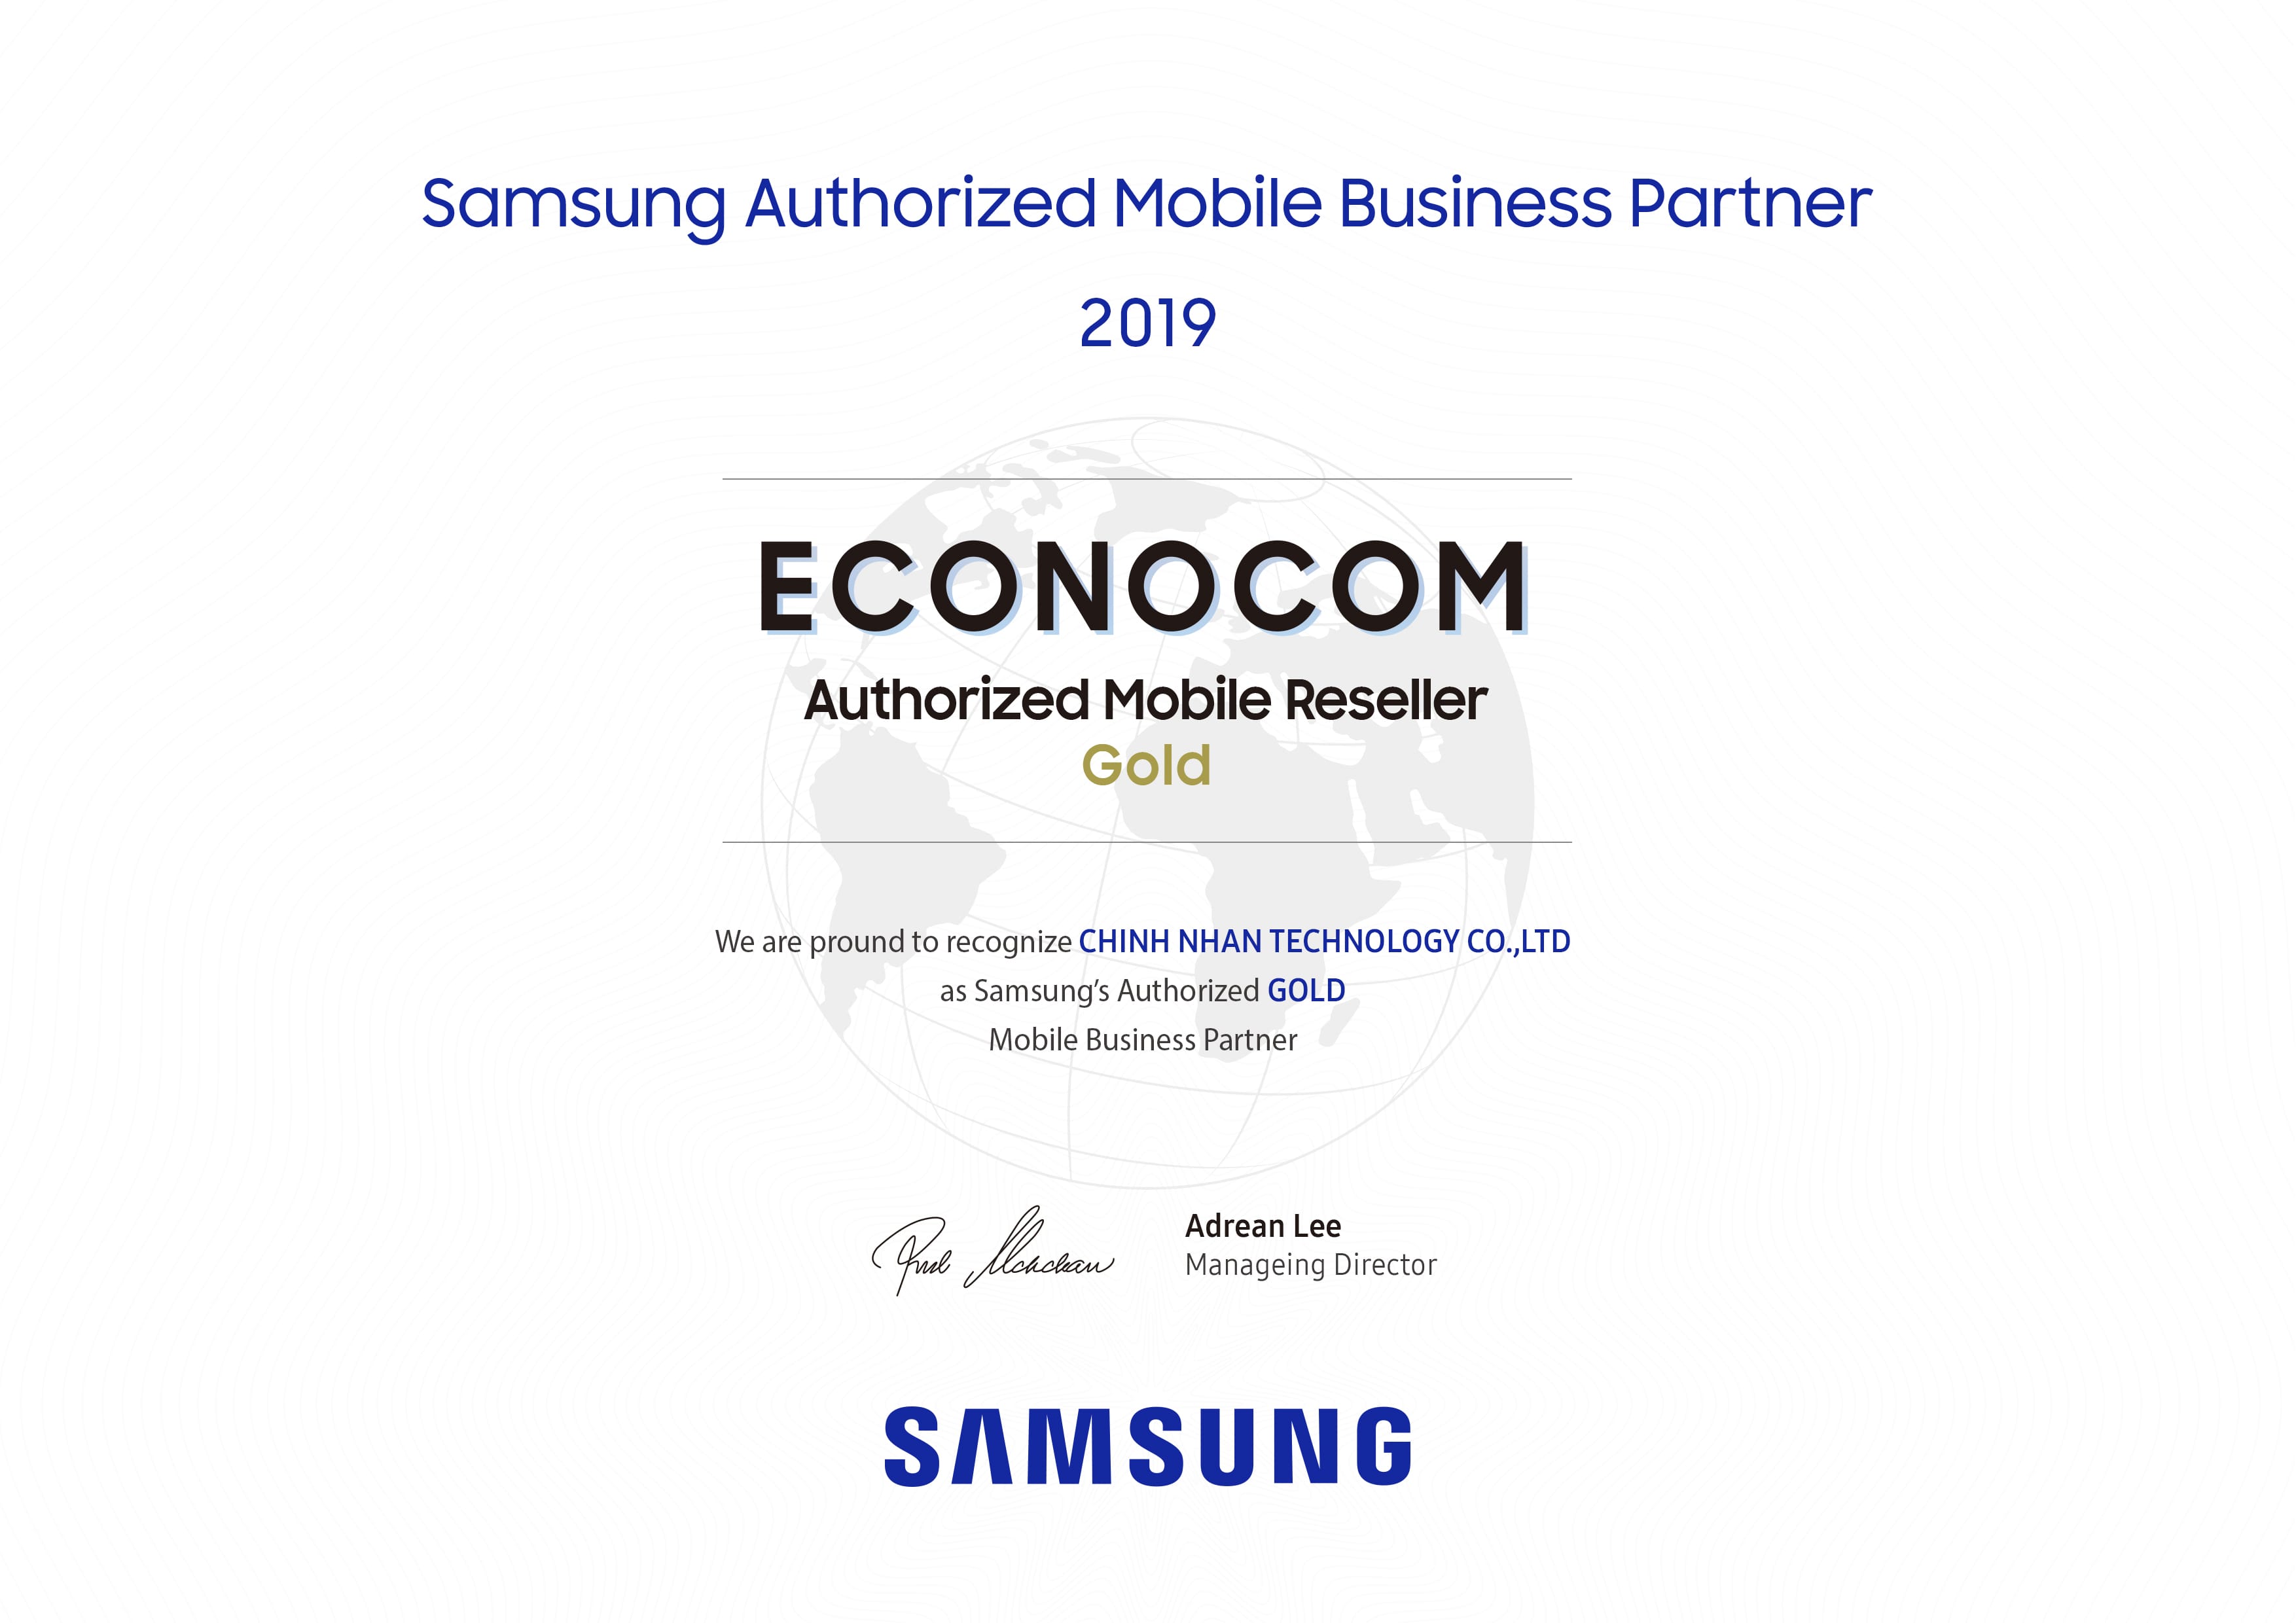 Econocom Samsung Mobile Reseller